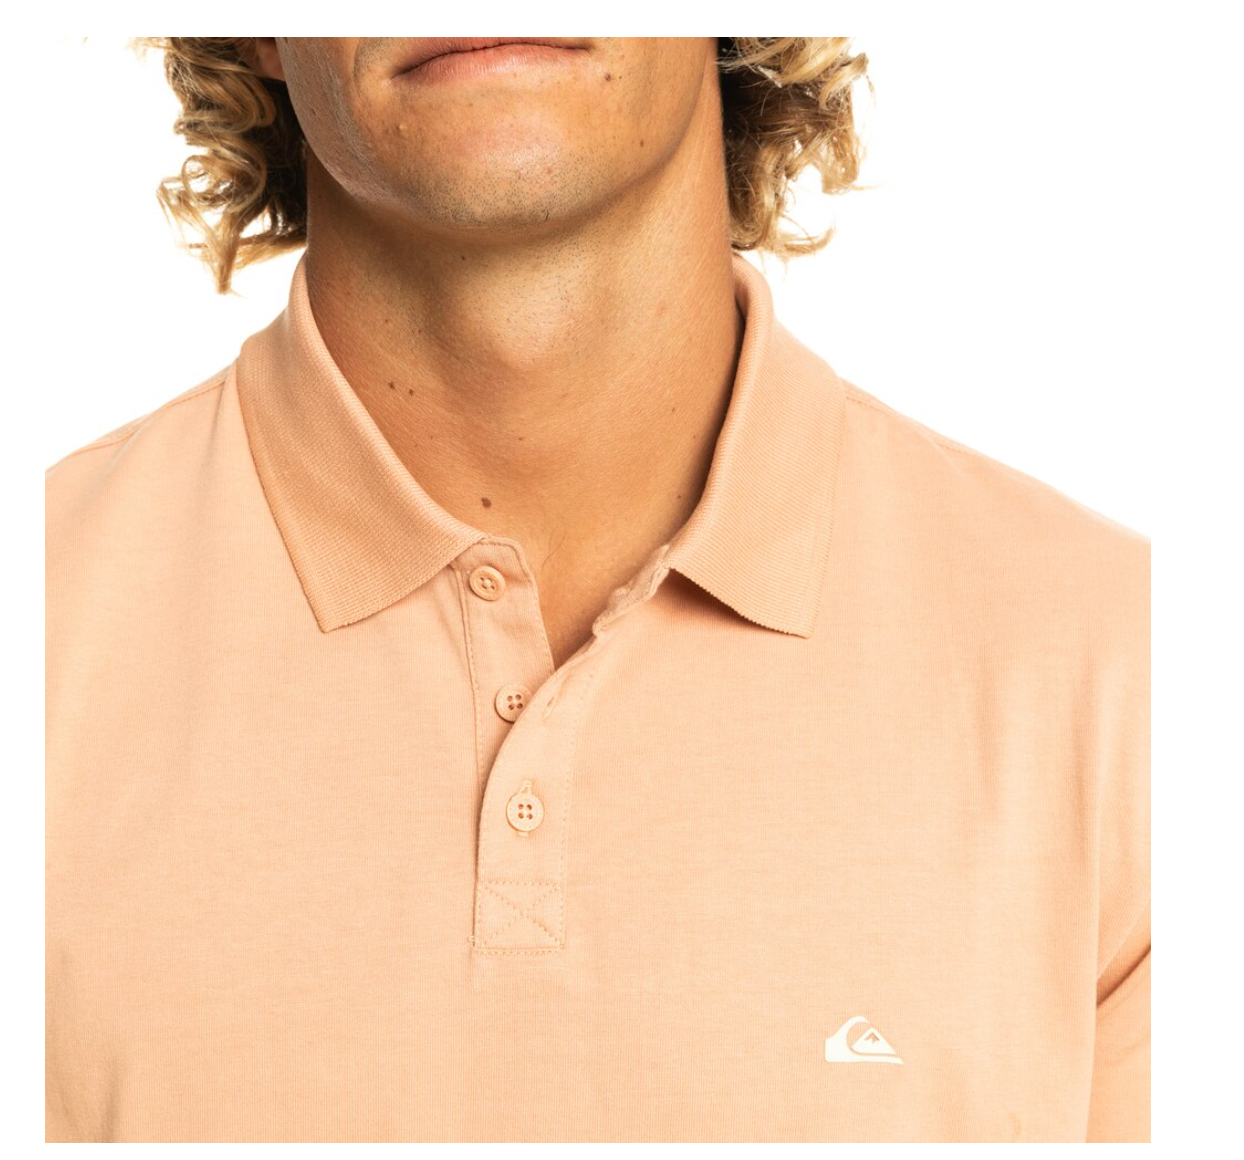 Quiksilver Essentials men's polo shirt